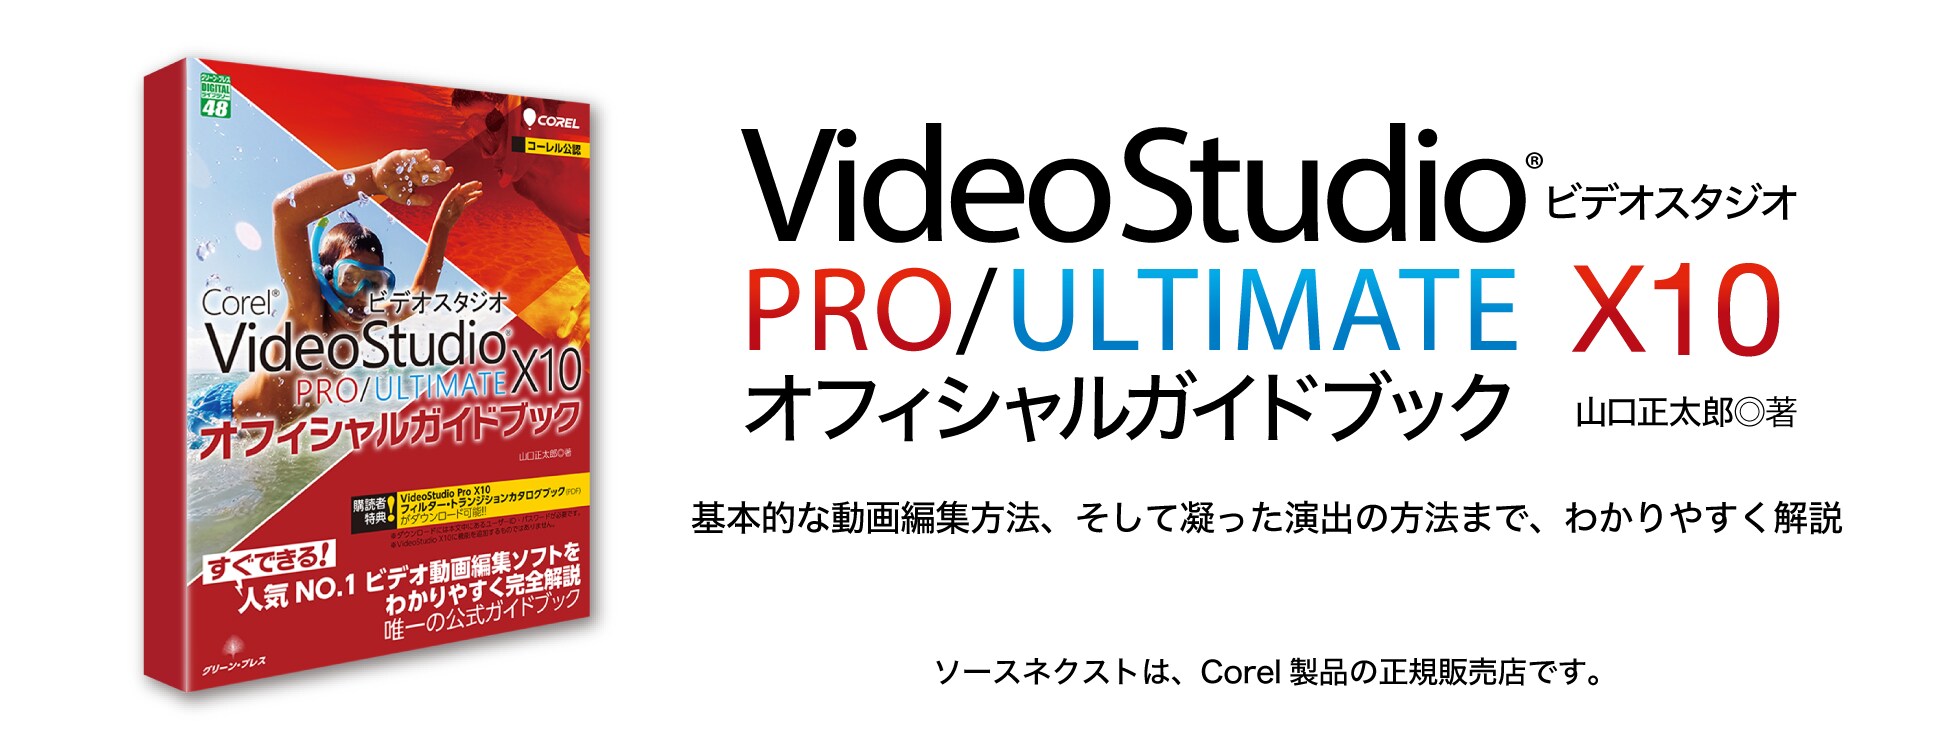 Corel Video Studio PRO/ULTIMATE 